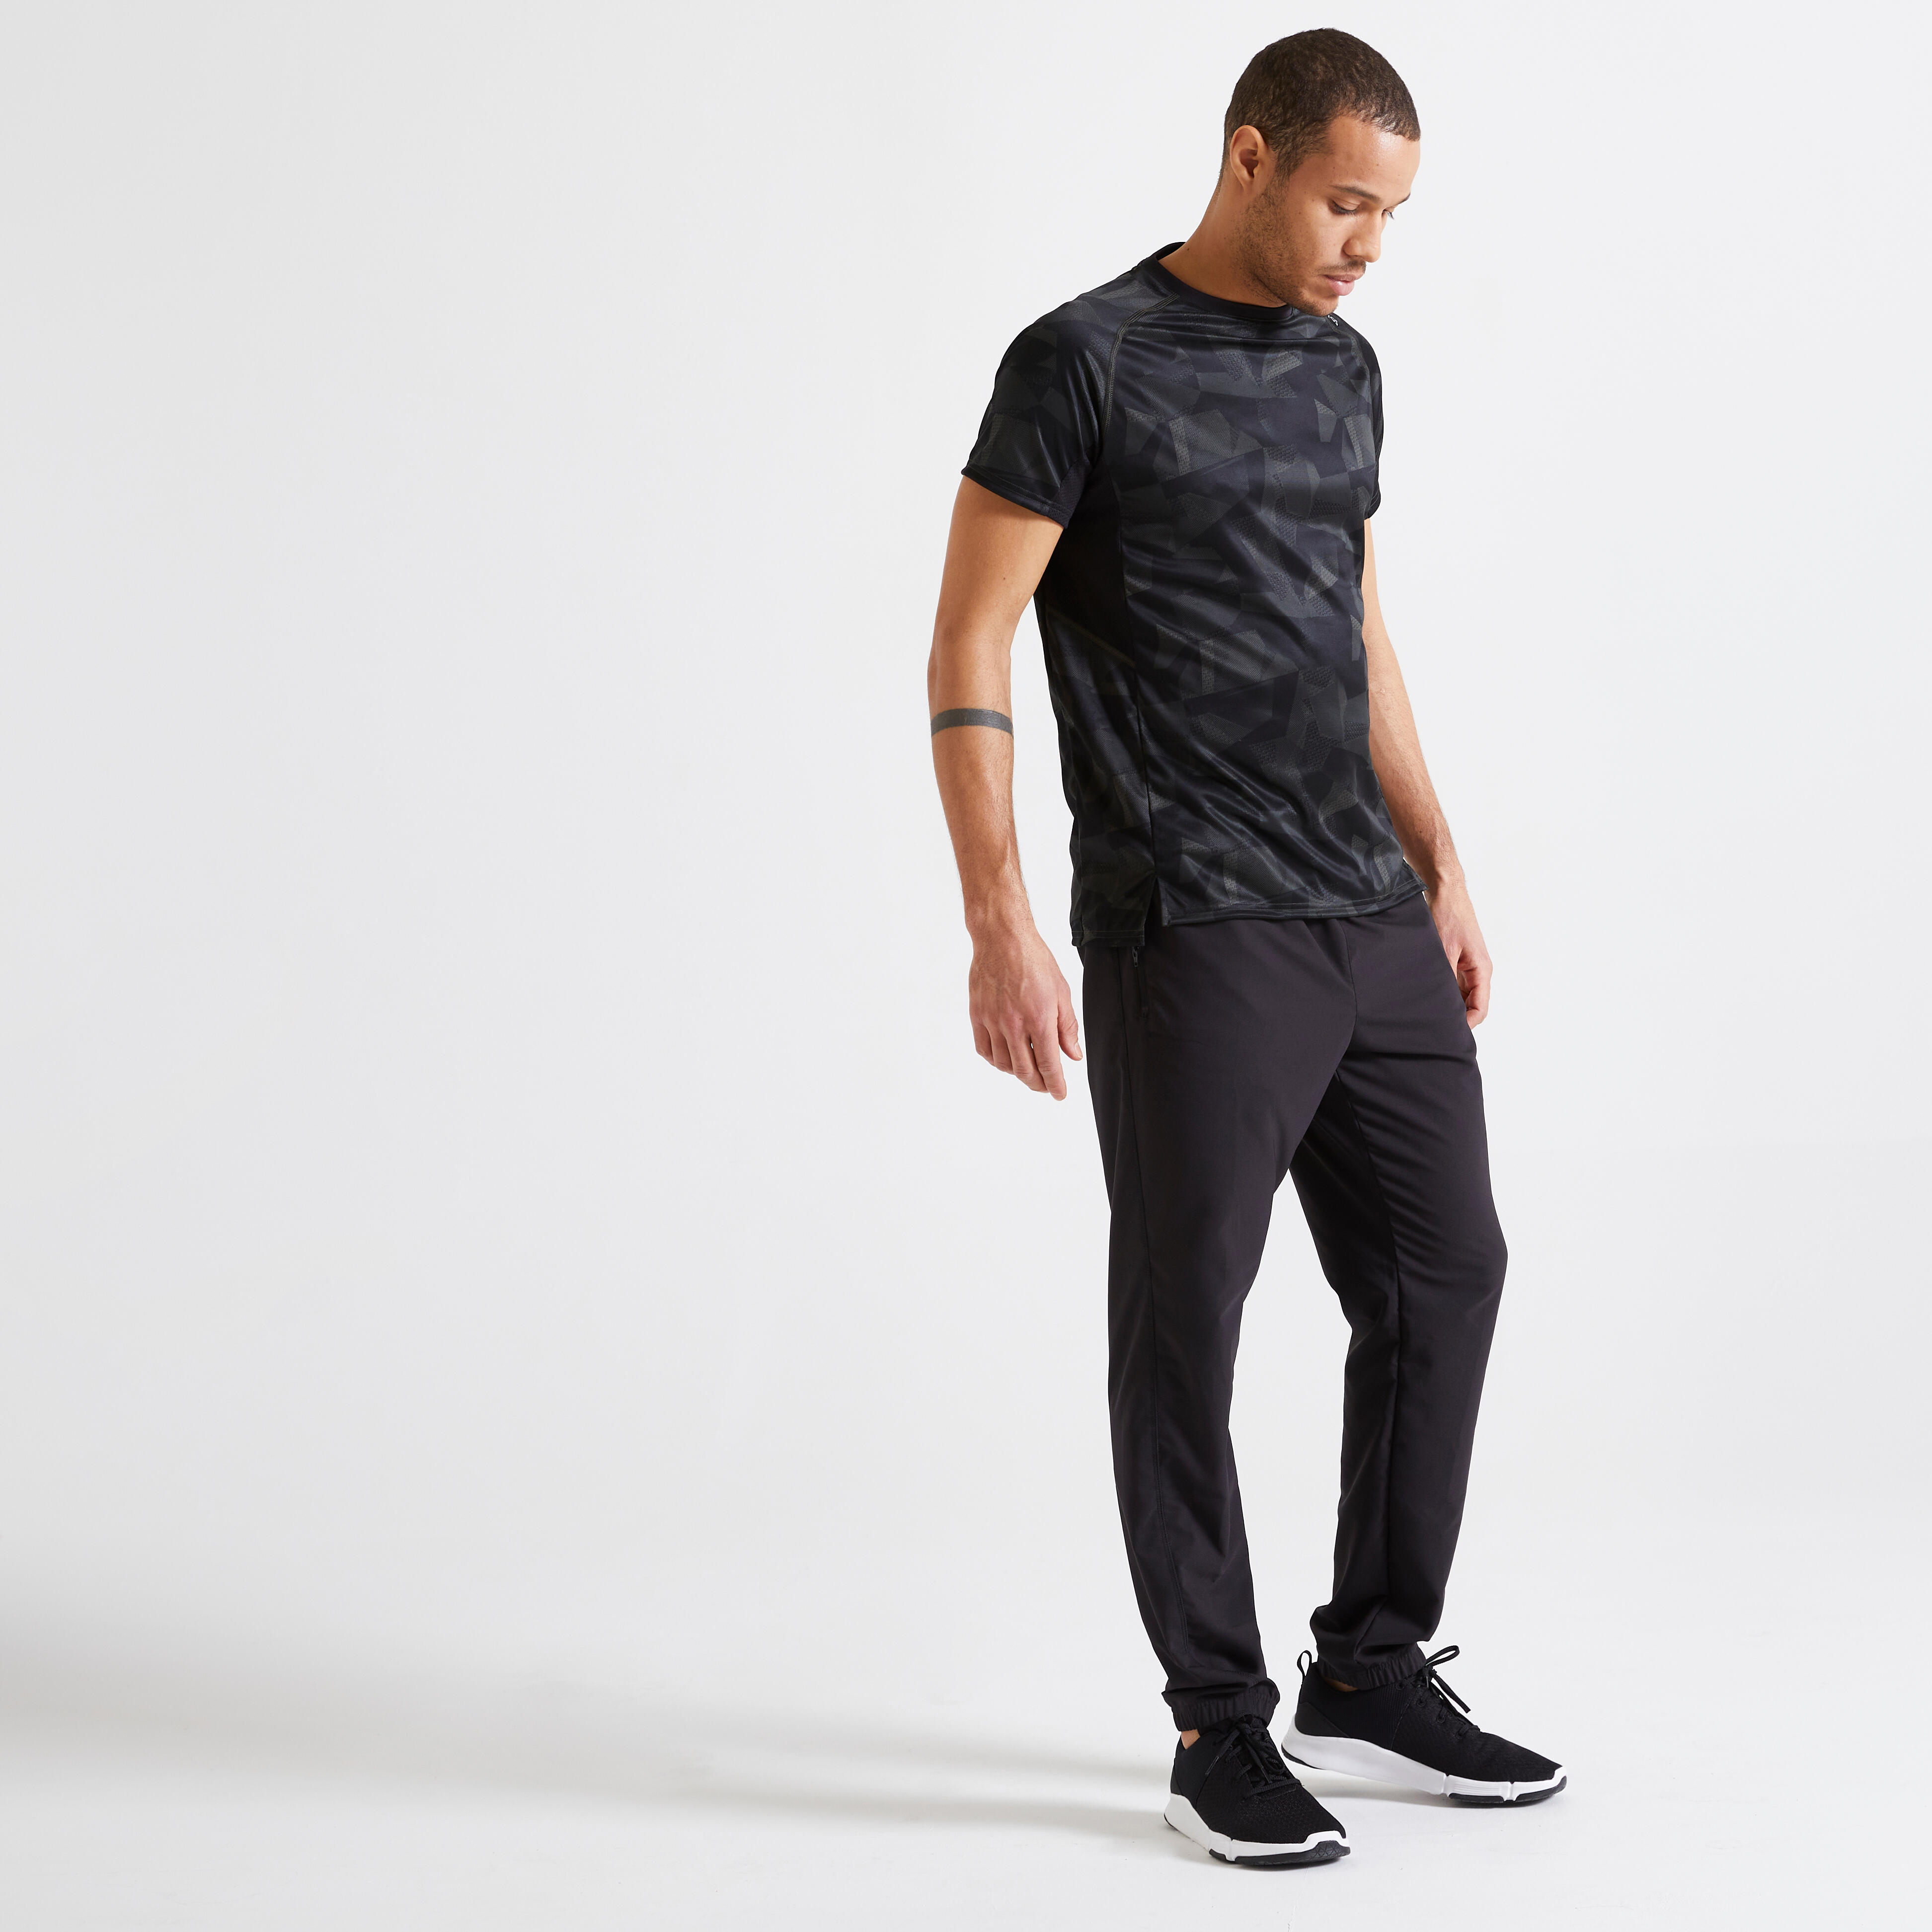 Domyos by Decathlon Men Black Regular Fit Solid Yoga Pants